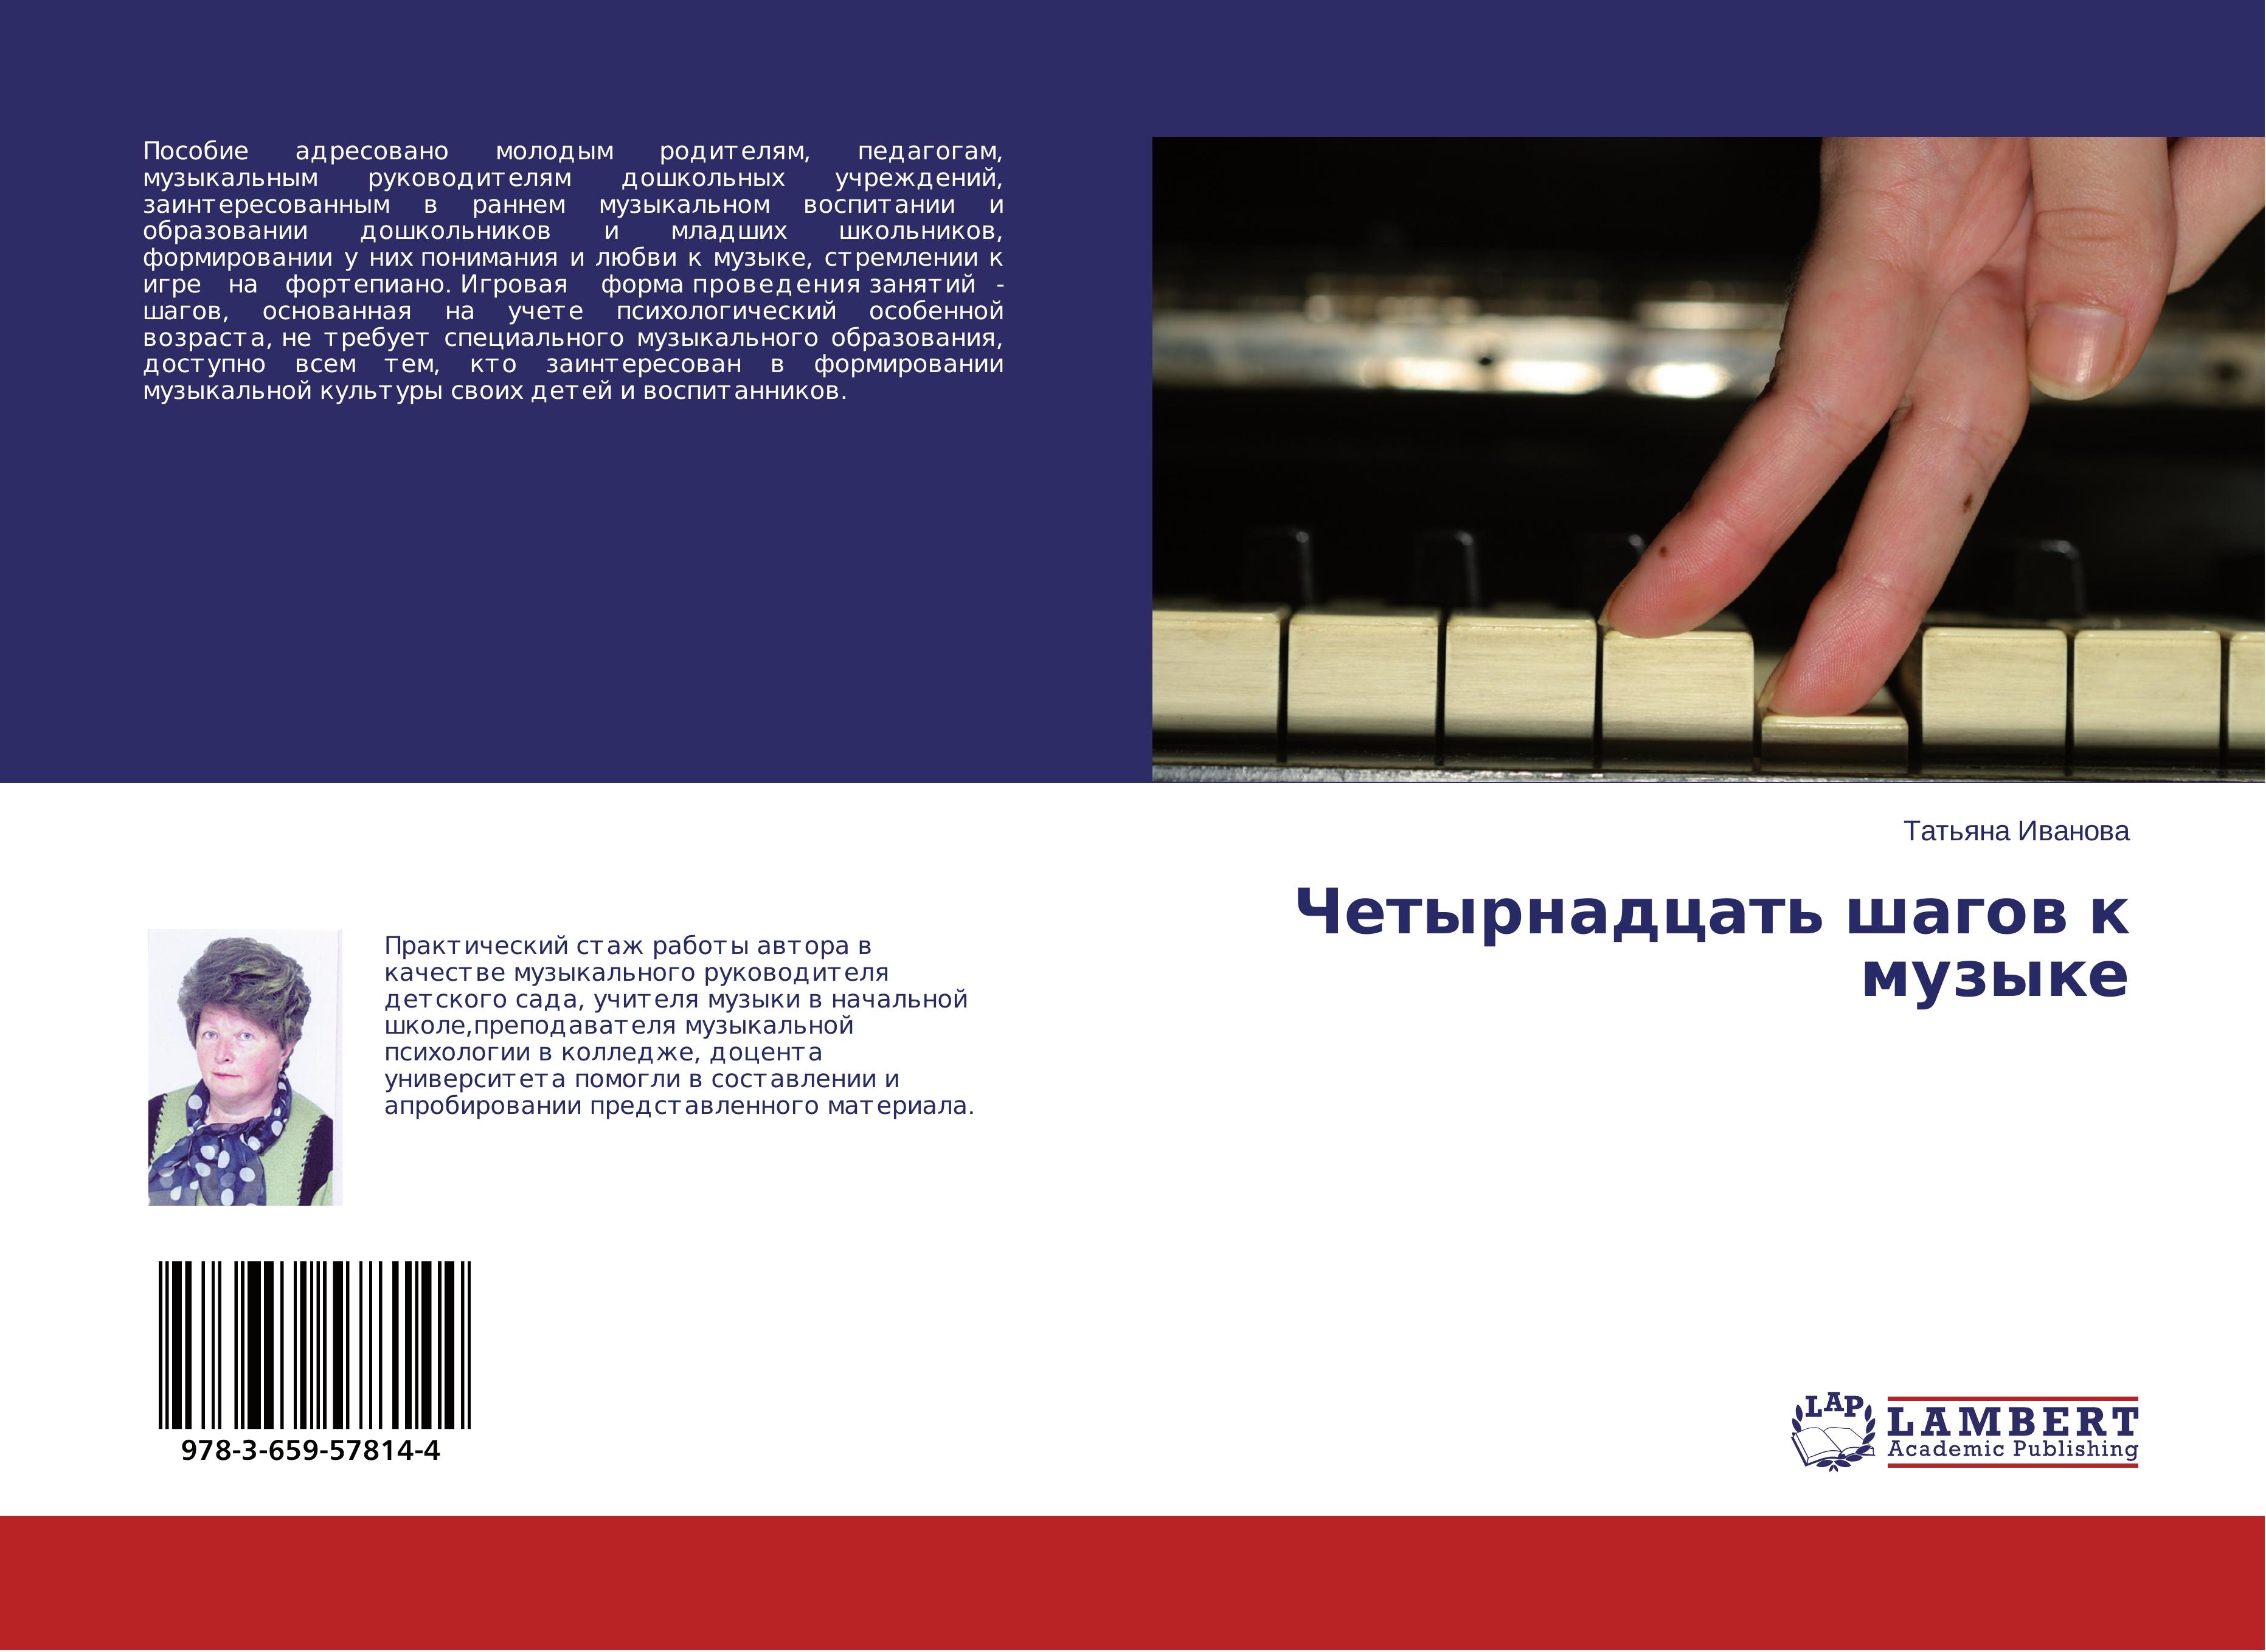 Chetyrnadcat' shagow k muzyke | Tat'qna Iwanowa | Taschenbuch | Paperback | Russisch | 2014 | LAP LAMBERT Academic Publishing | EAN 9783659578144 - Iwanowa, Tat'qna